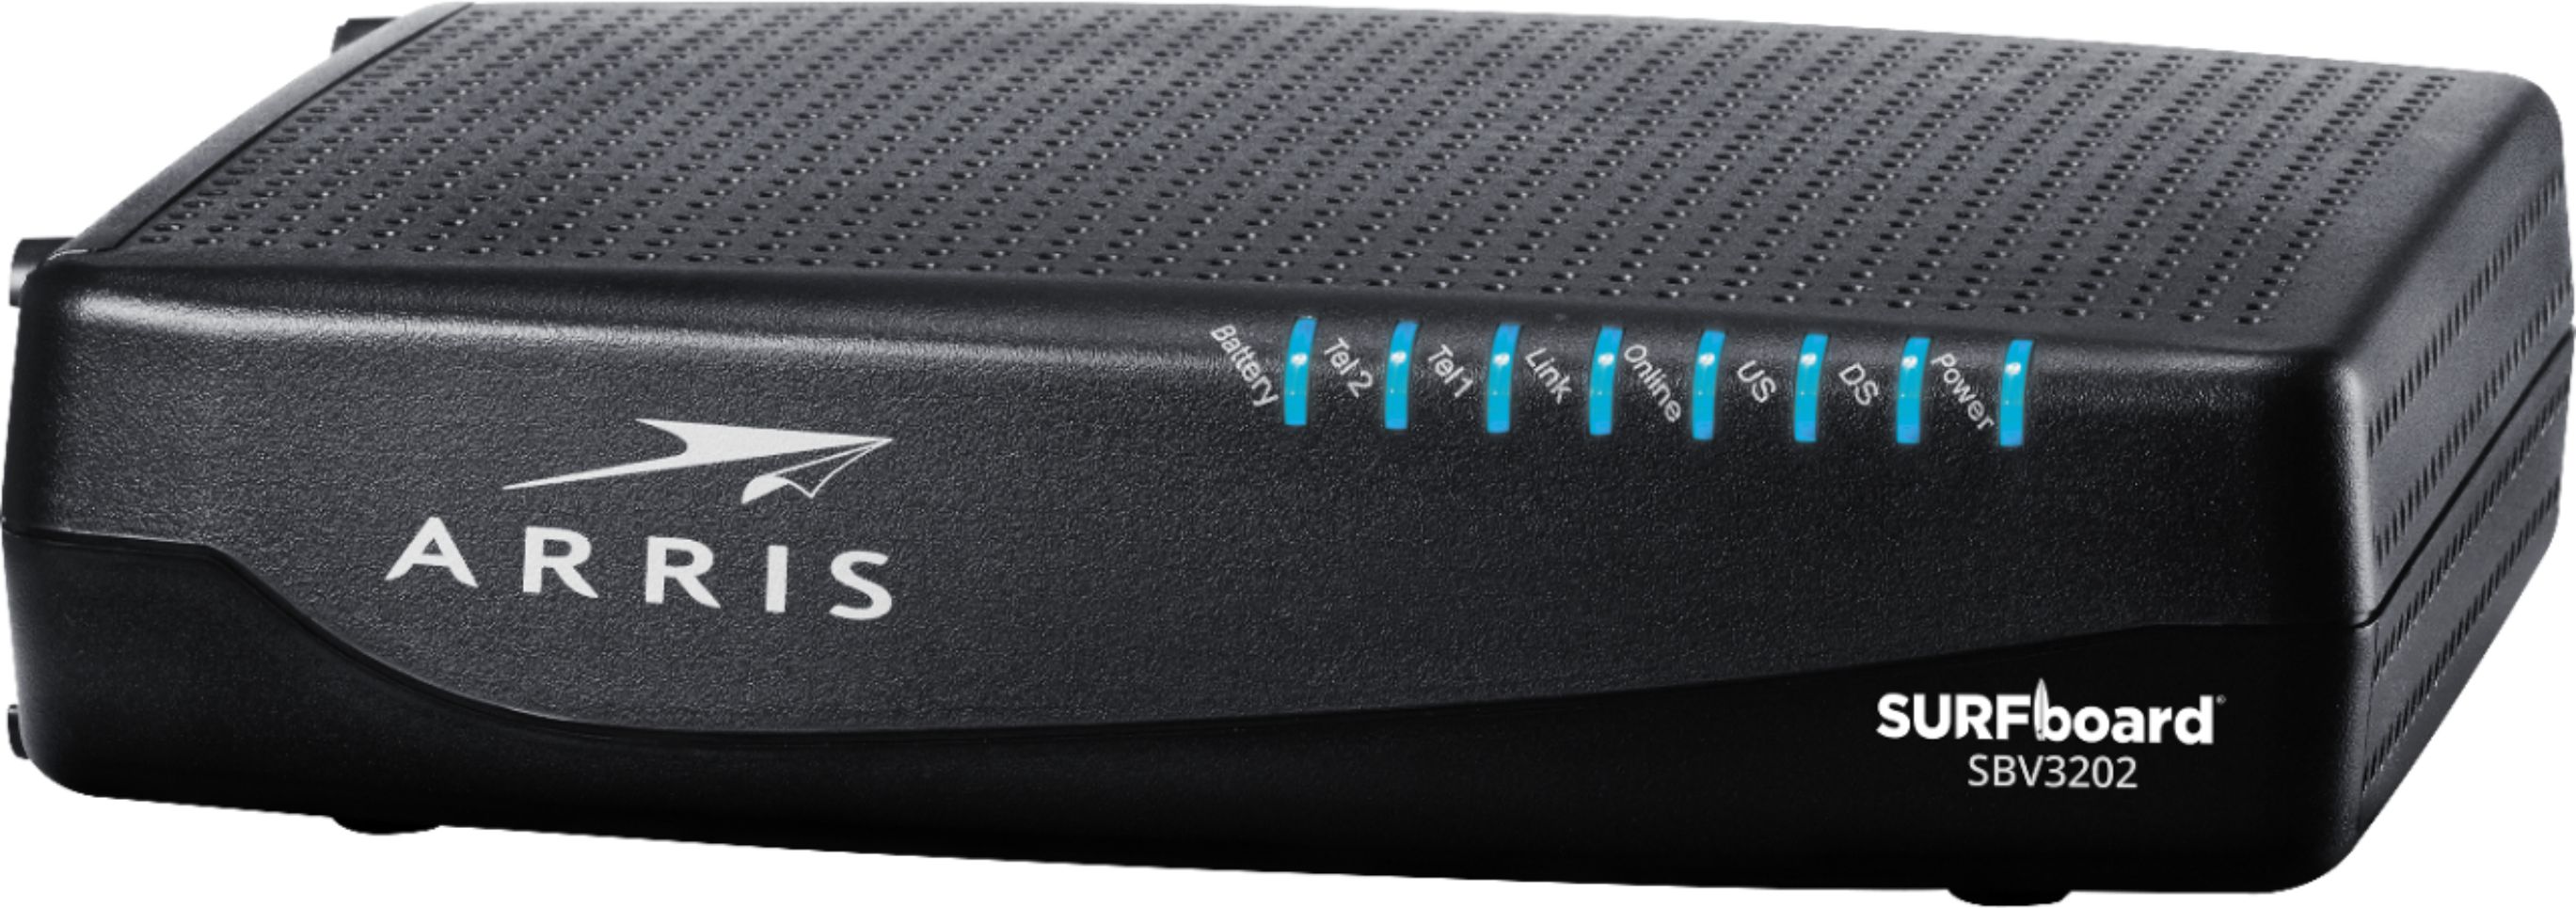 Left View: ARRIS - SURFboard 32 x 8 DOCSIS 3.0 Voice Cable Modem for Xfinity - Black